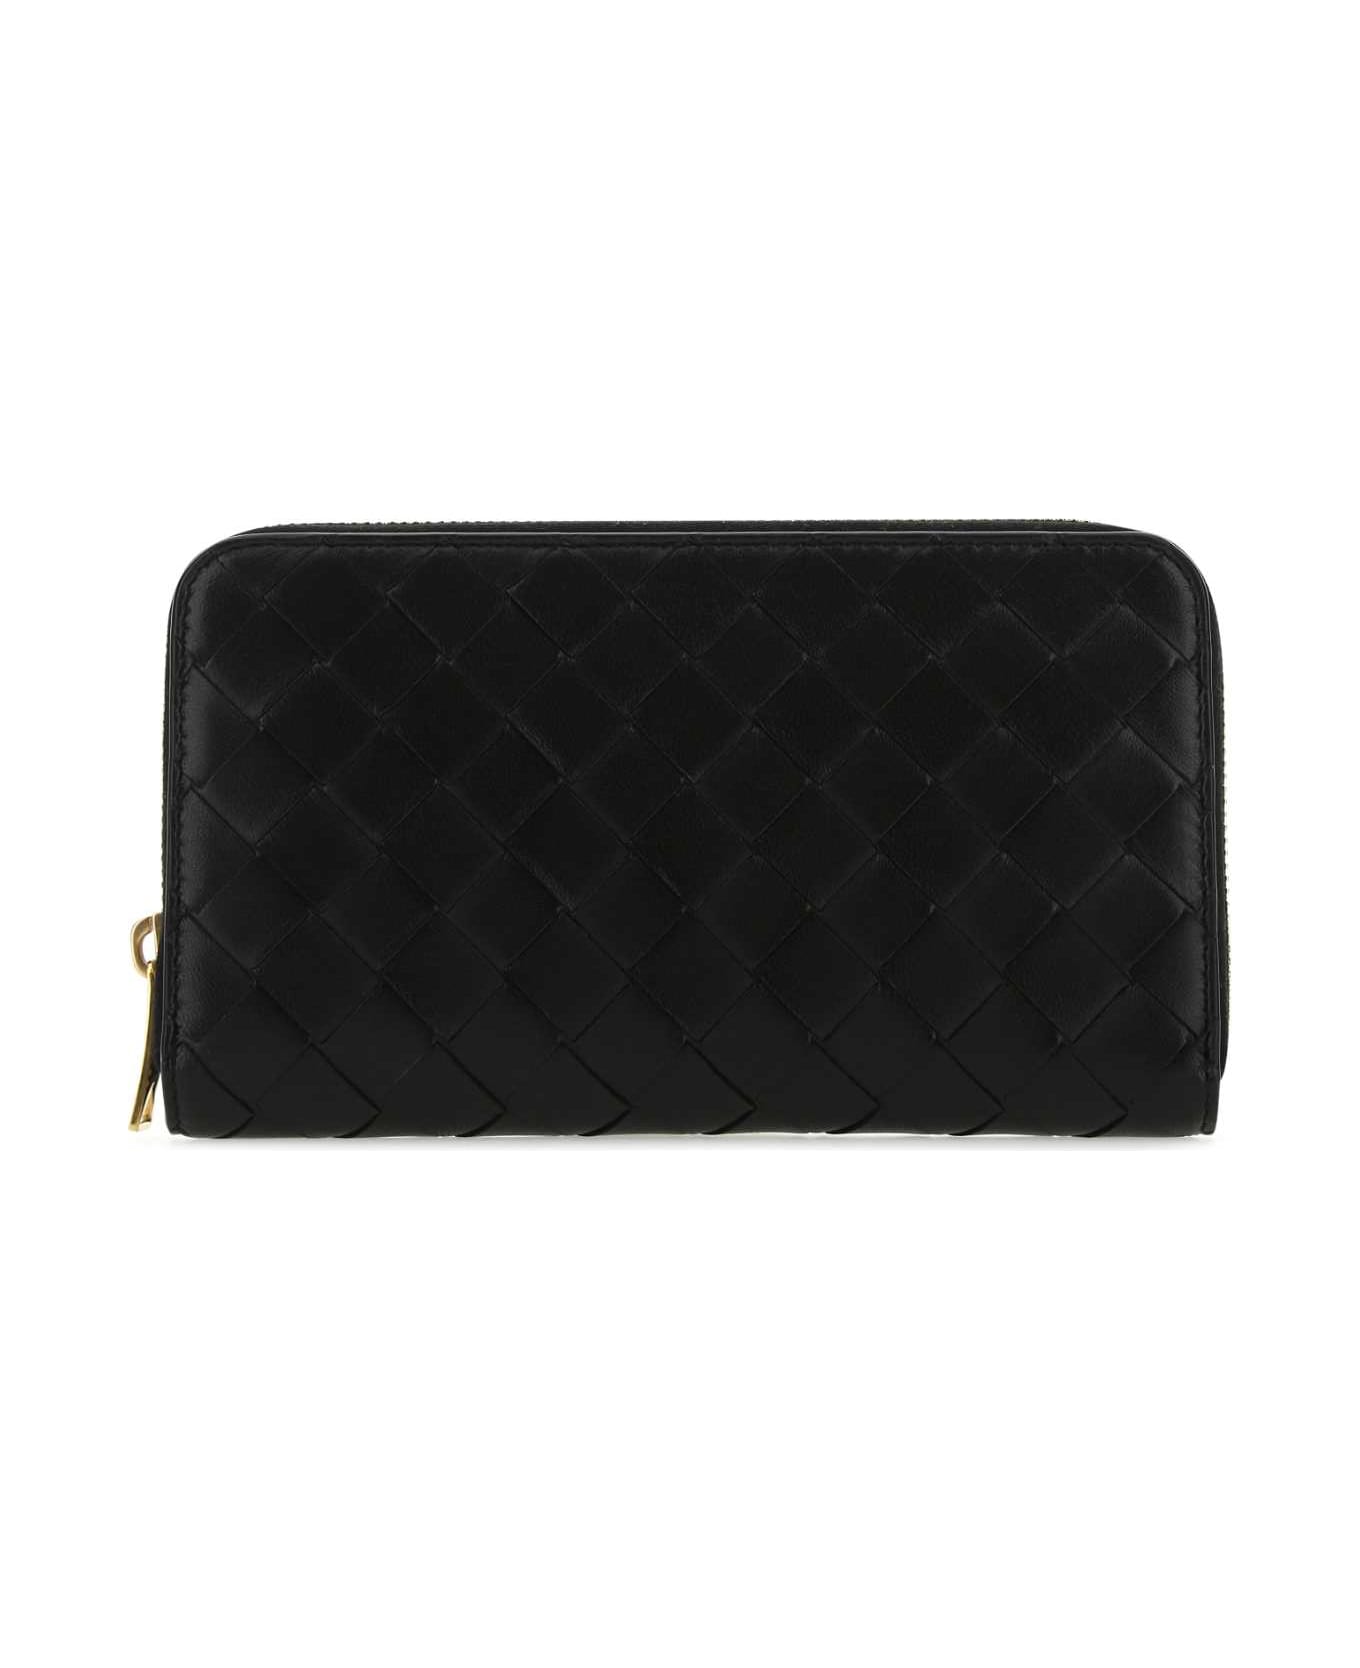 Bottega Veneta Black Nappa Leather Wallet - 8425 財布